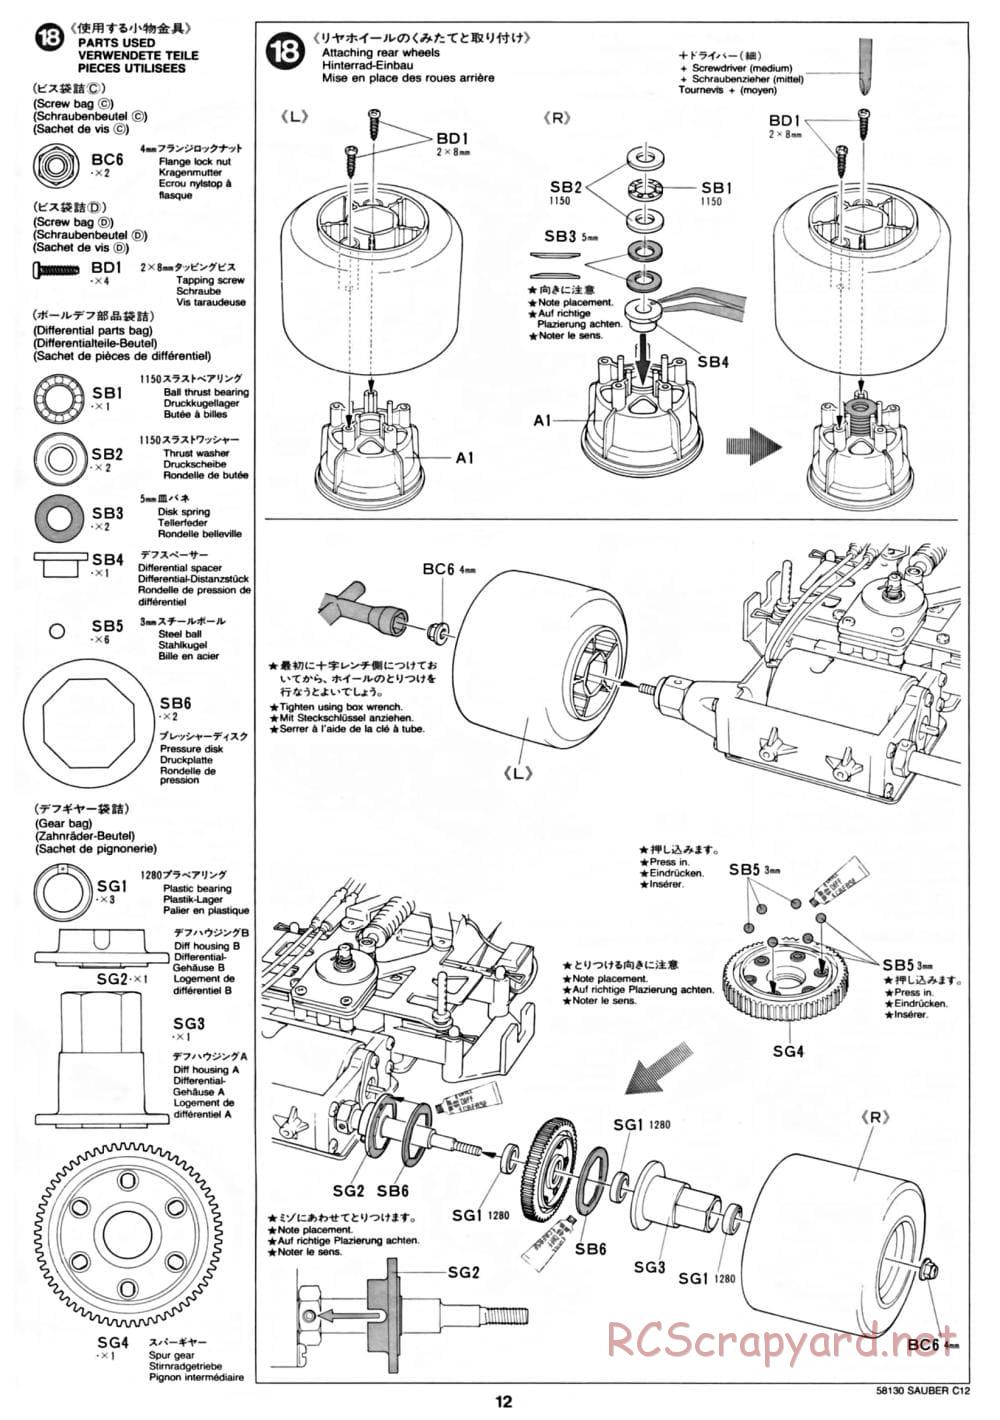 Tamiya - Sauber C12 - F103 Chassis - Manual - Page 12